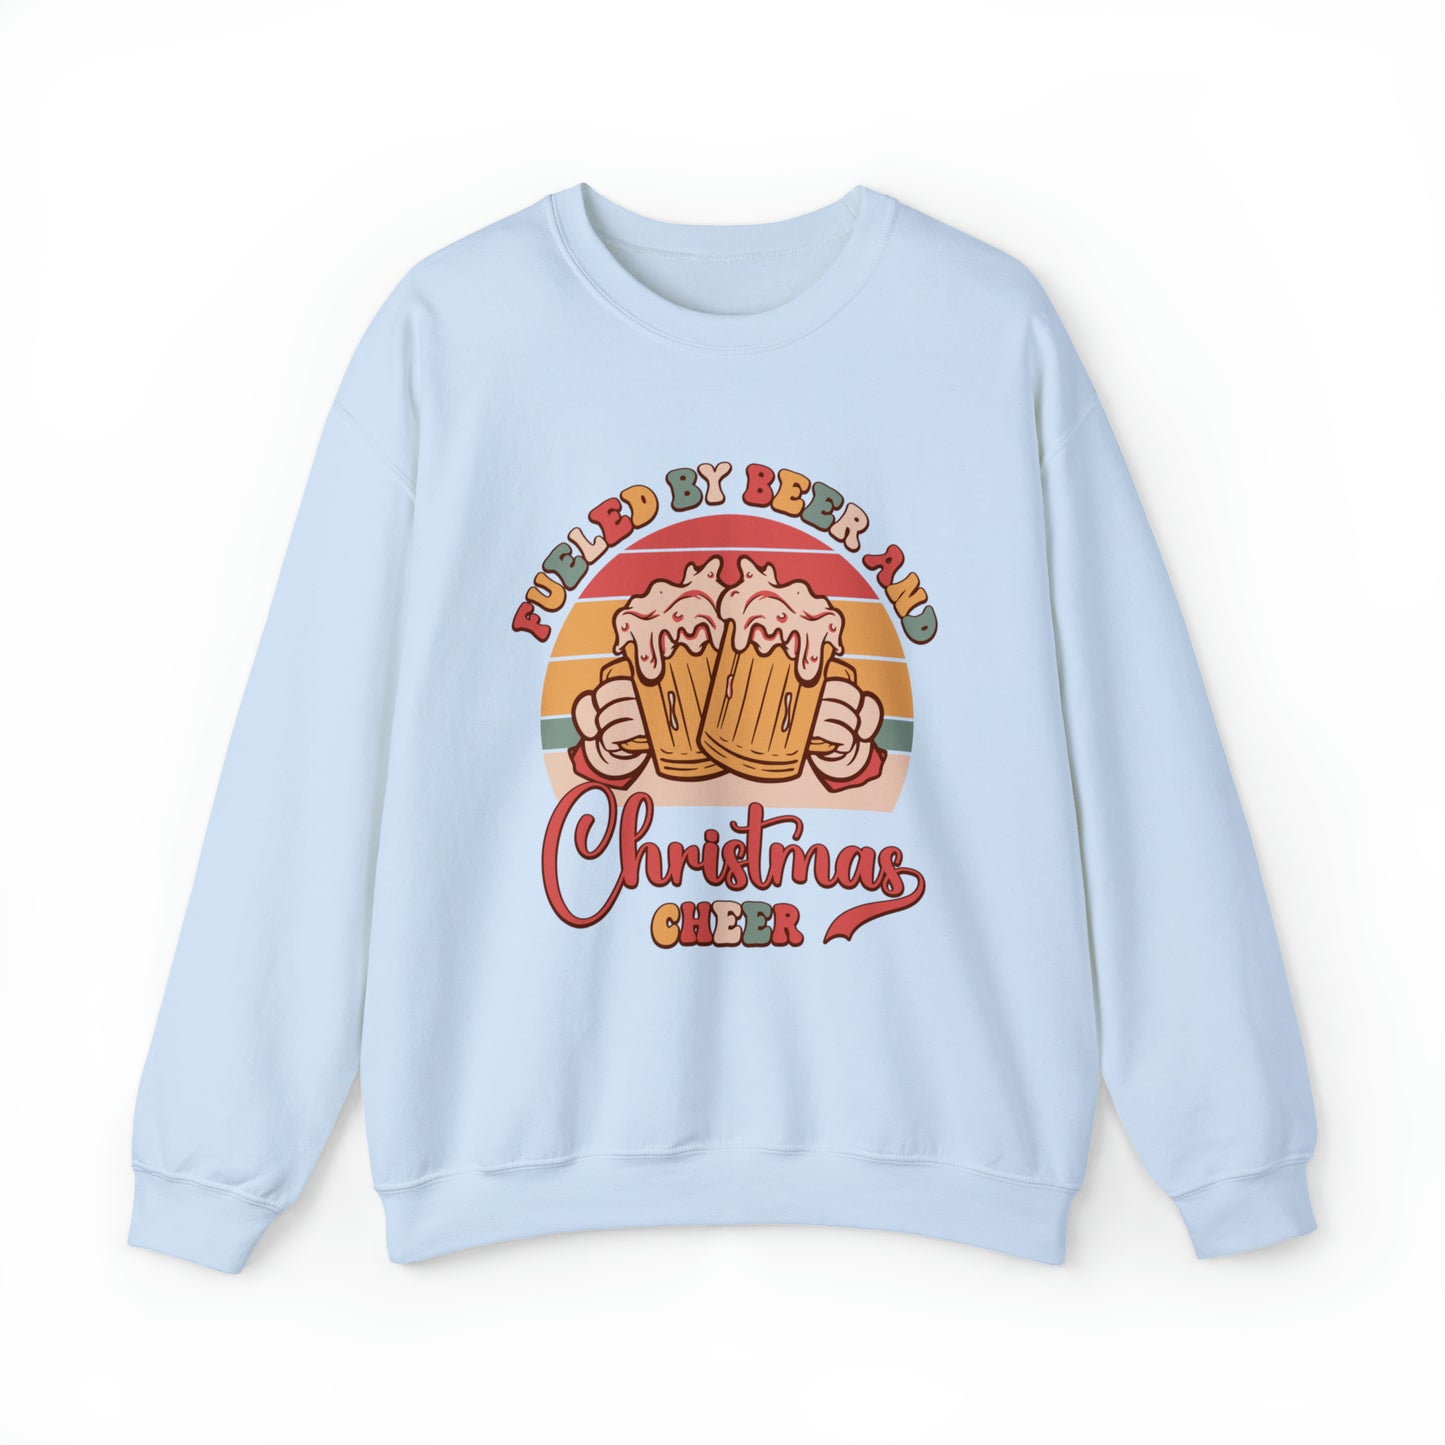 Fueled by Beer and Christmas Cheer Adult Unisex Funny Christmas Crewneck Sweatshirt